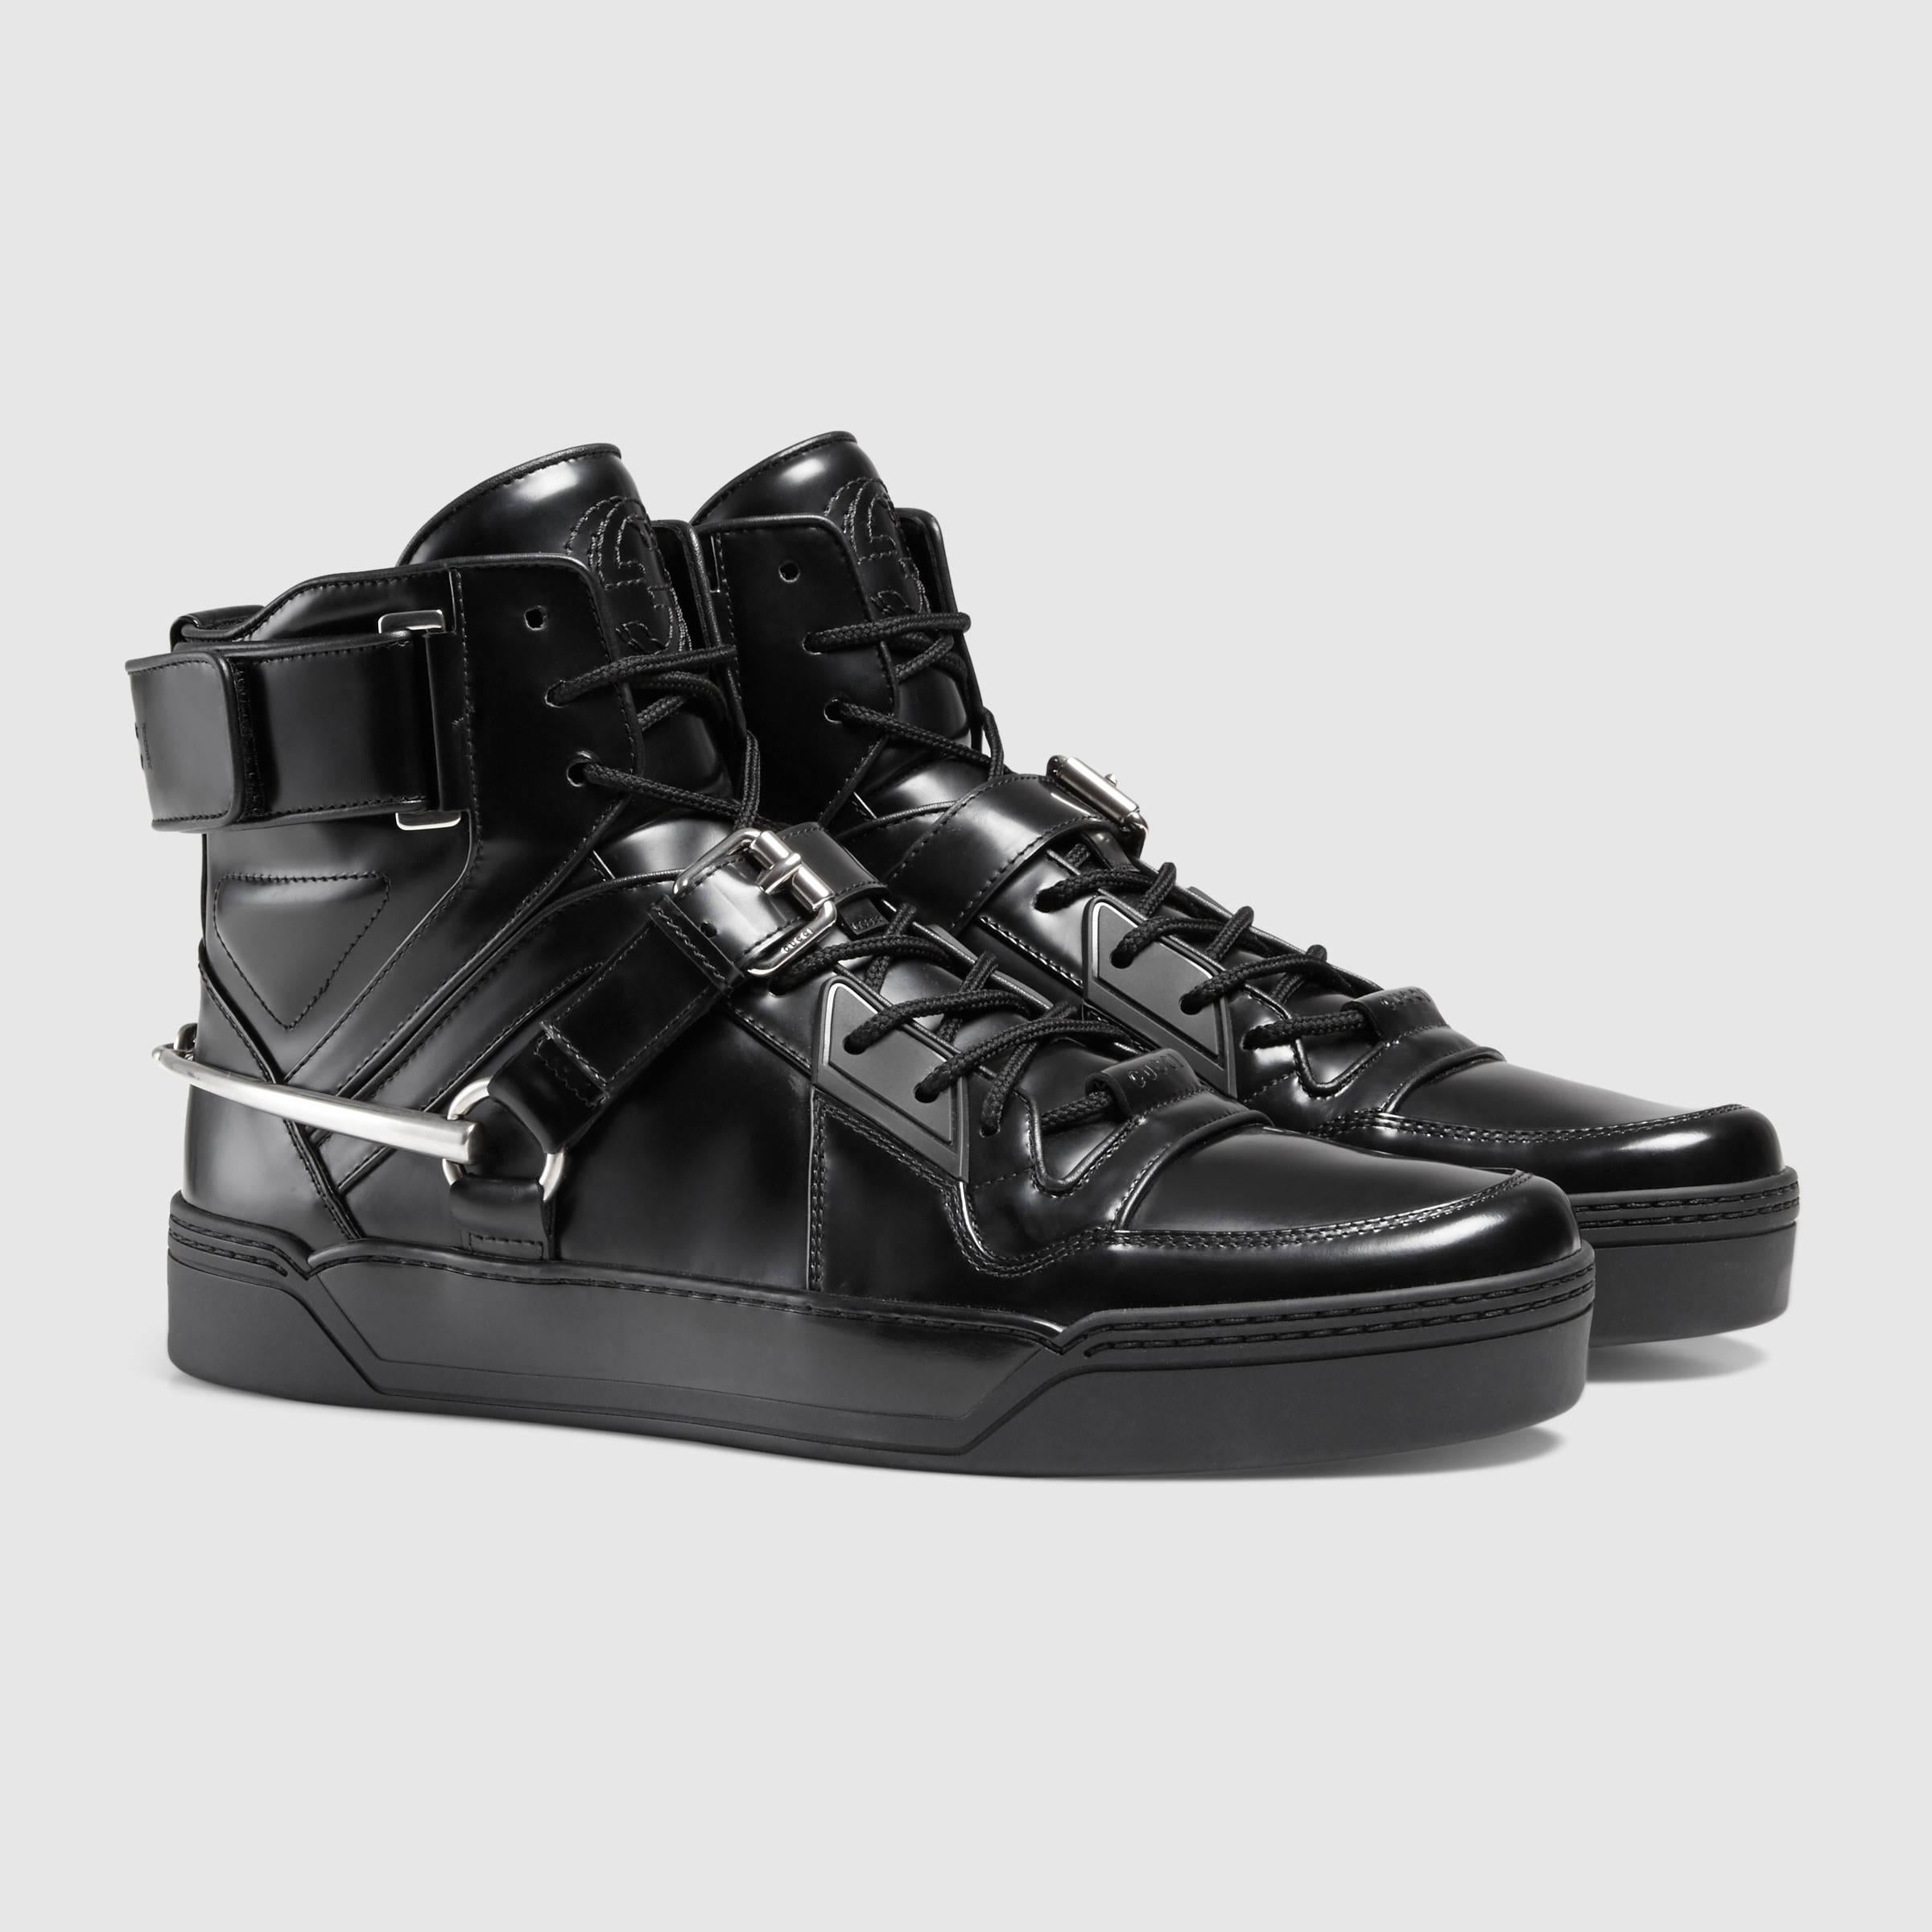 New Gucci Men's Black *Basket Darko* High-Top Sneaker Gucci sizes 8.5  9  9.5 1